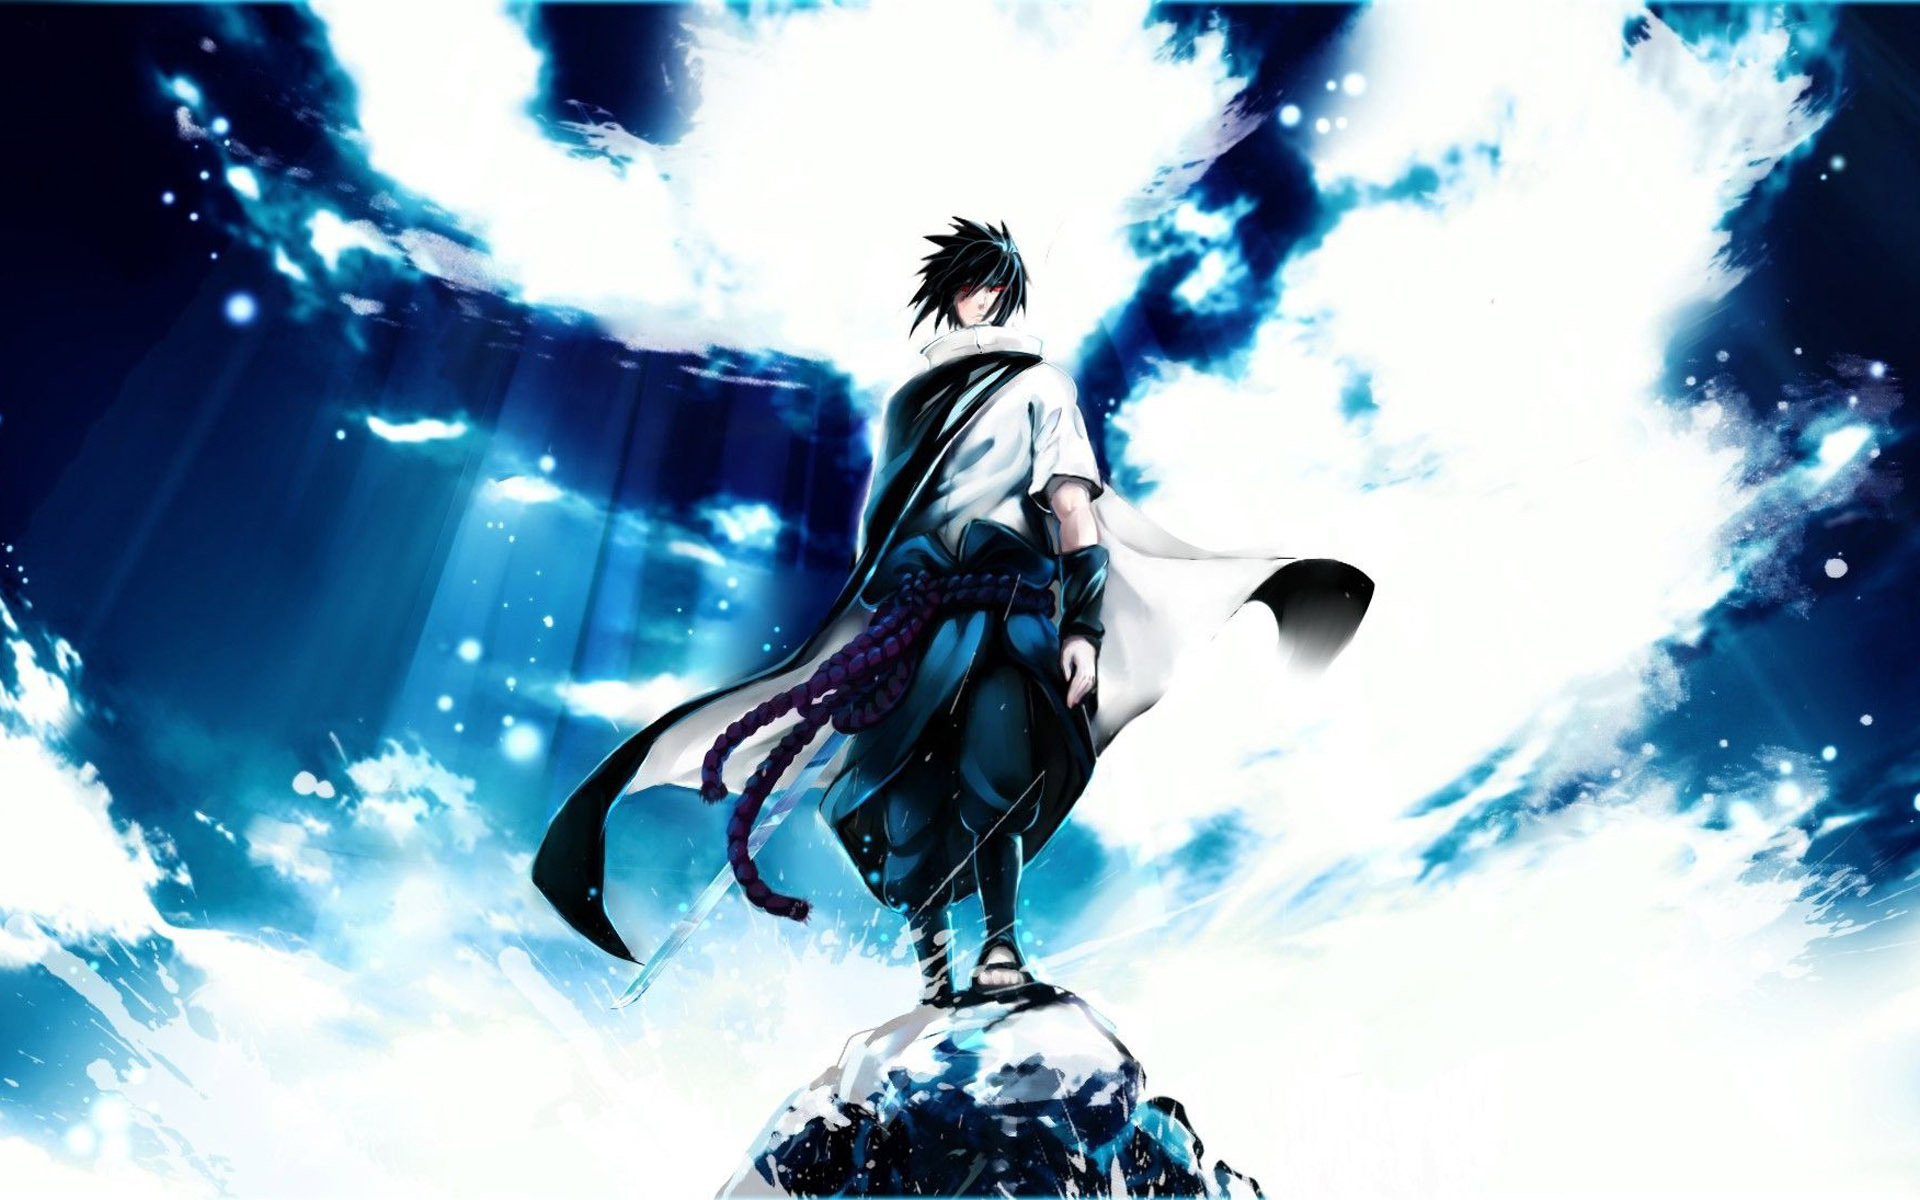 sasuke wallpaper hd,cg kunstwerk,anime,grafikdesign,himmel,schwarzes haar